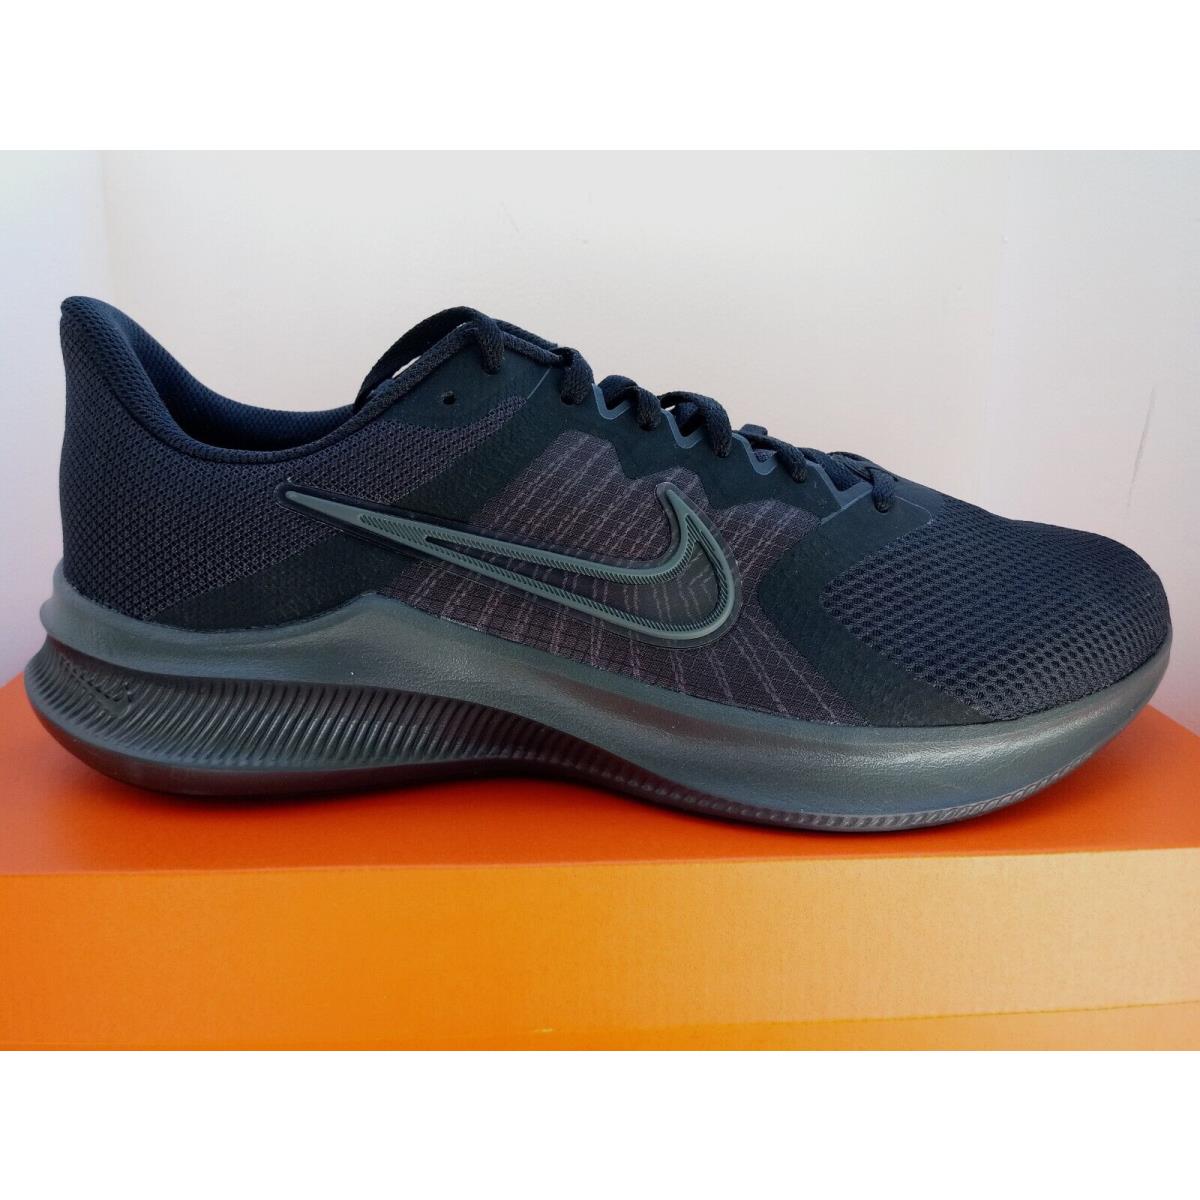 Nike shoes Downshifter - Black 7